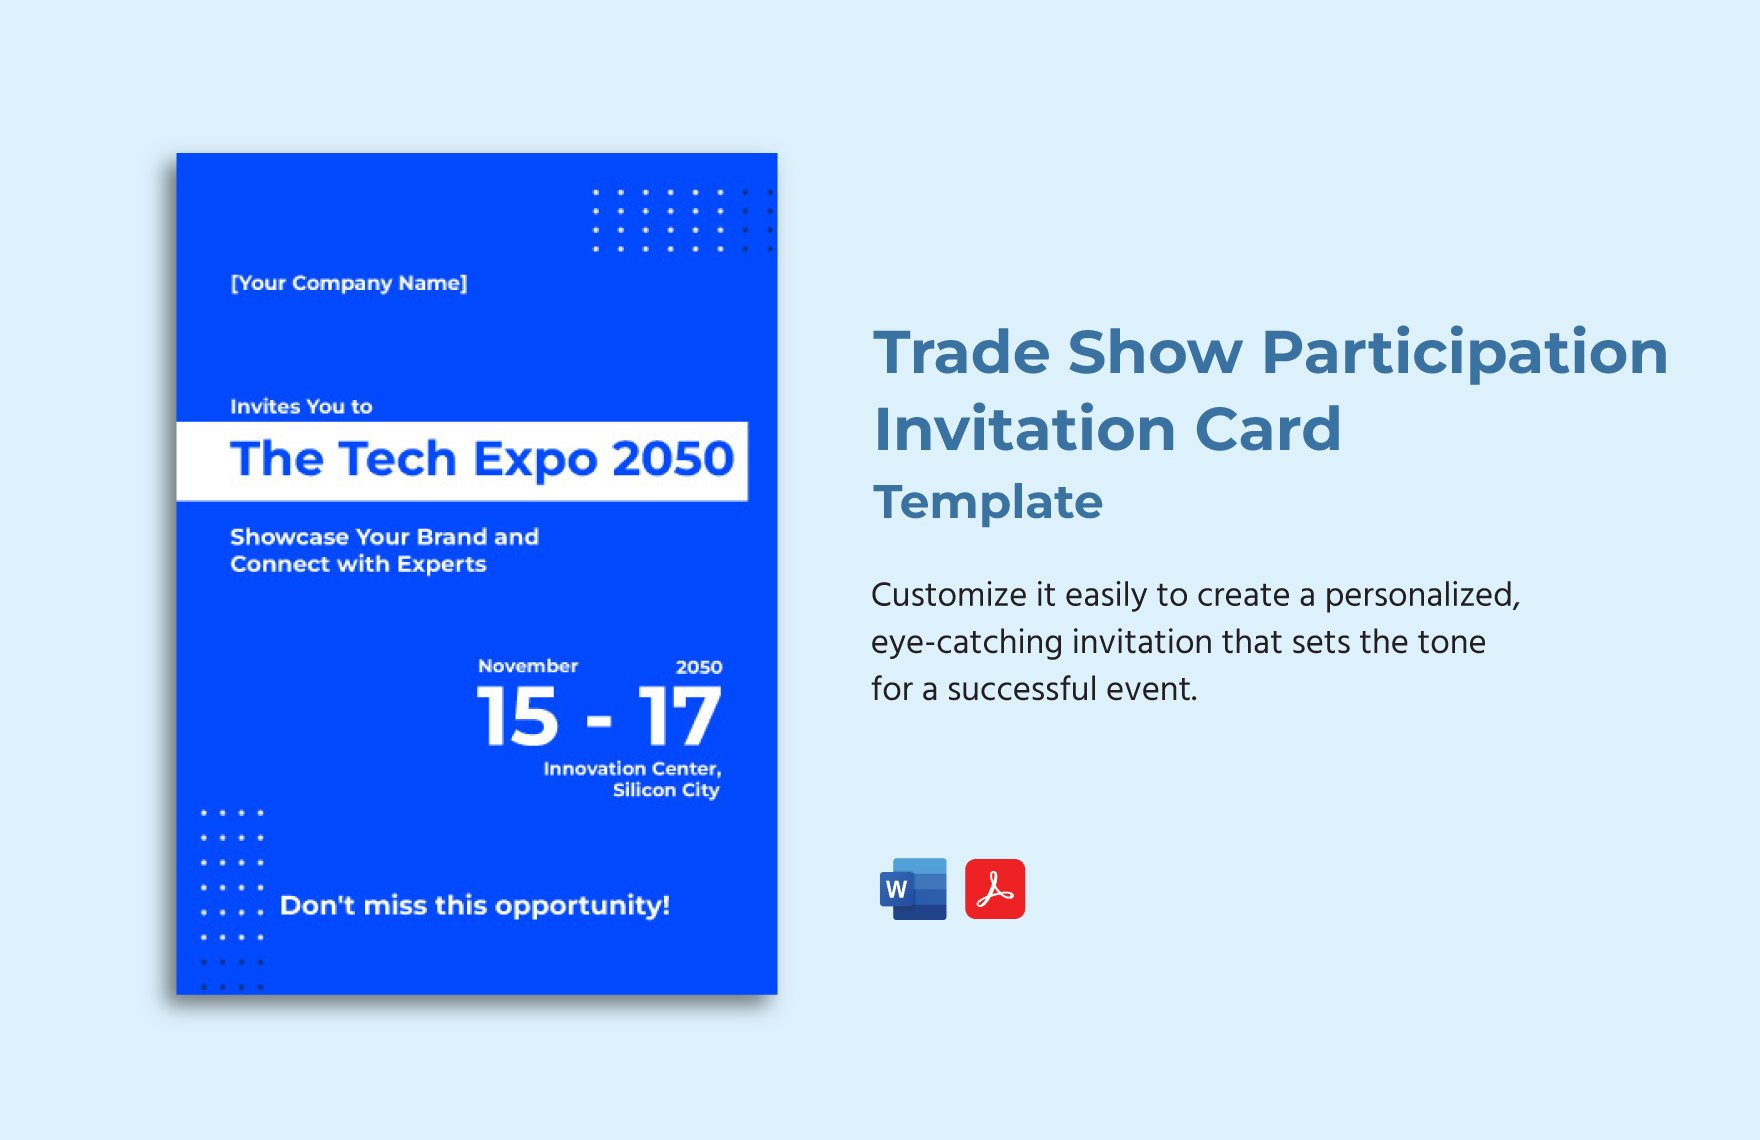 Trade Show Participation Invitation Card Template